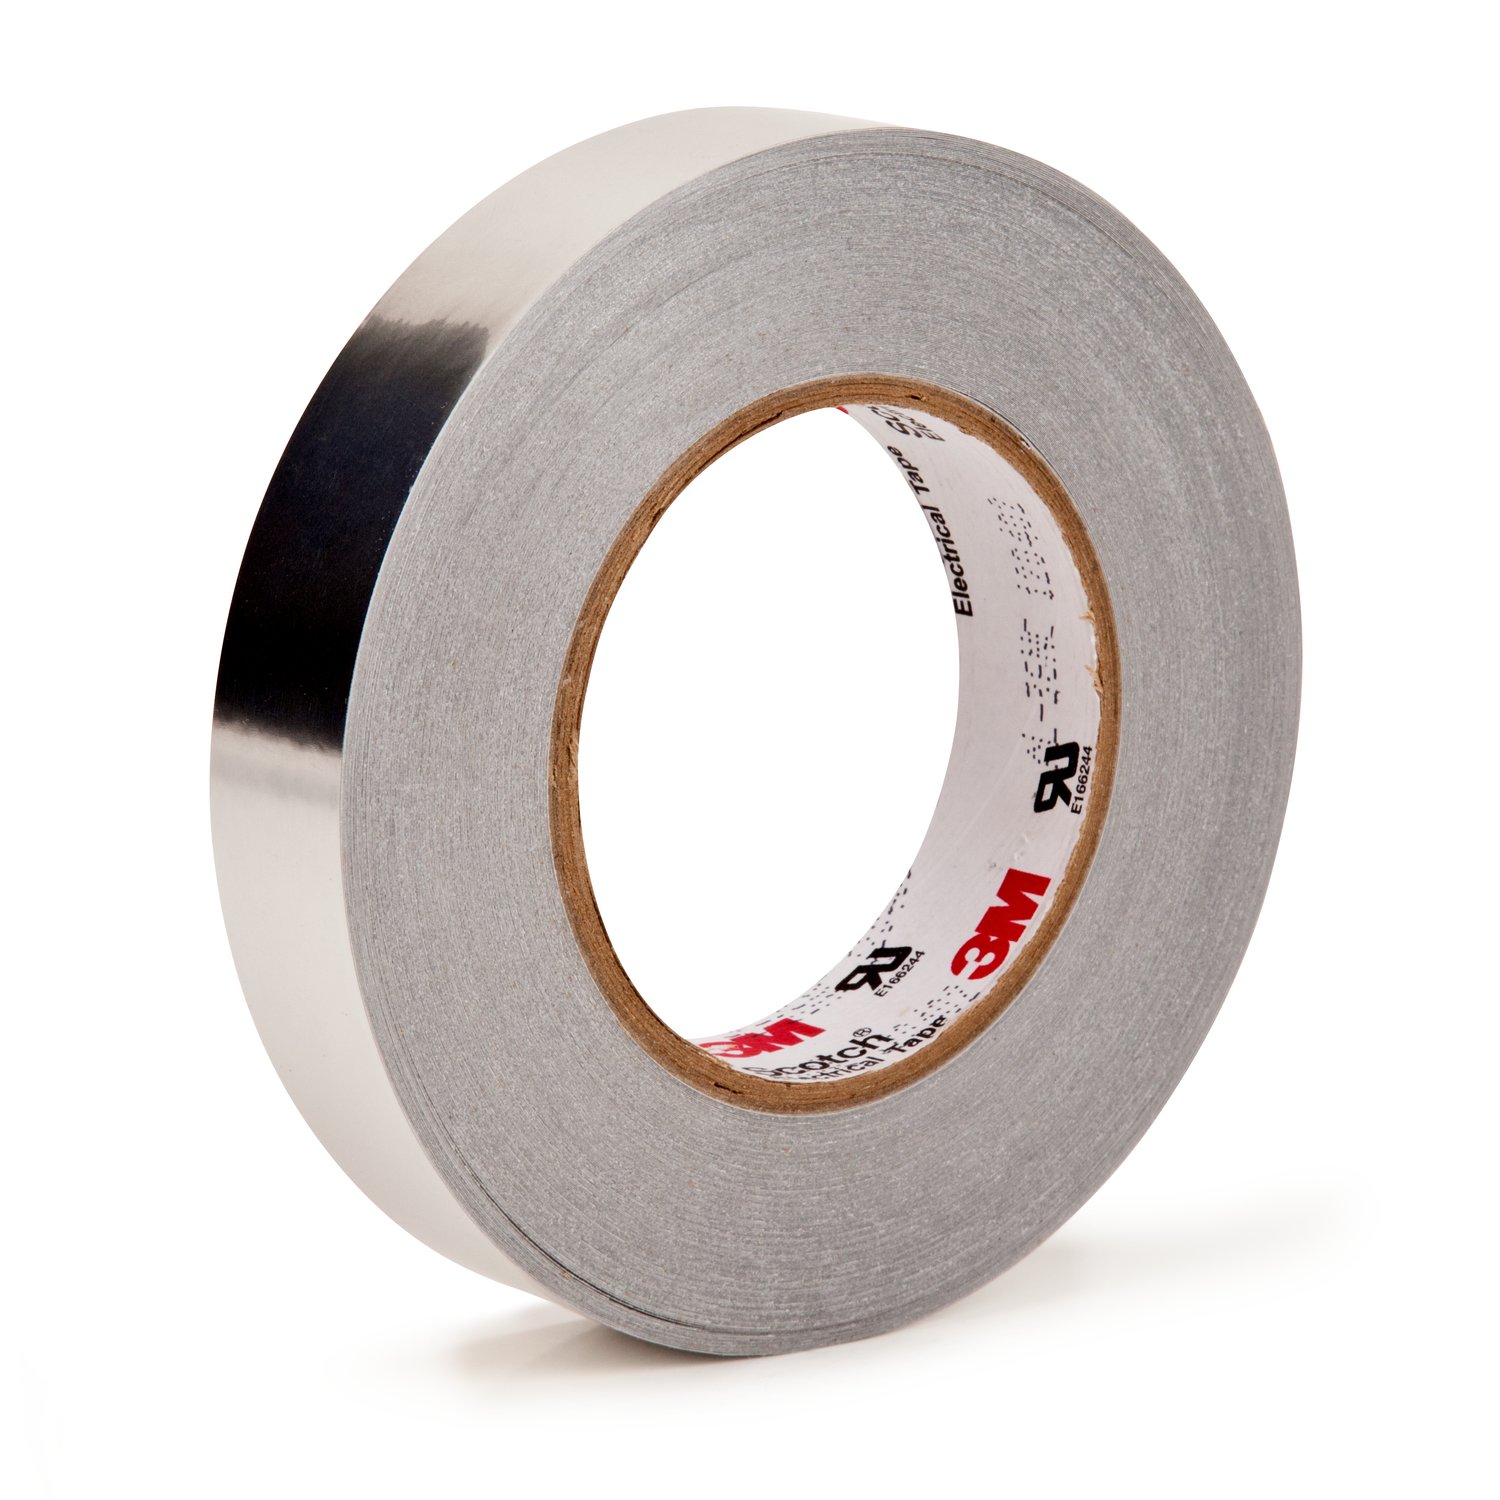 7010319514 - 3M Laminated Aluminum Foil EMI Shielding Tape AL-36NC, 6.56 in x 10 in,
10 Sheets/Bag